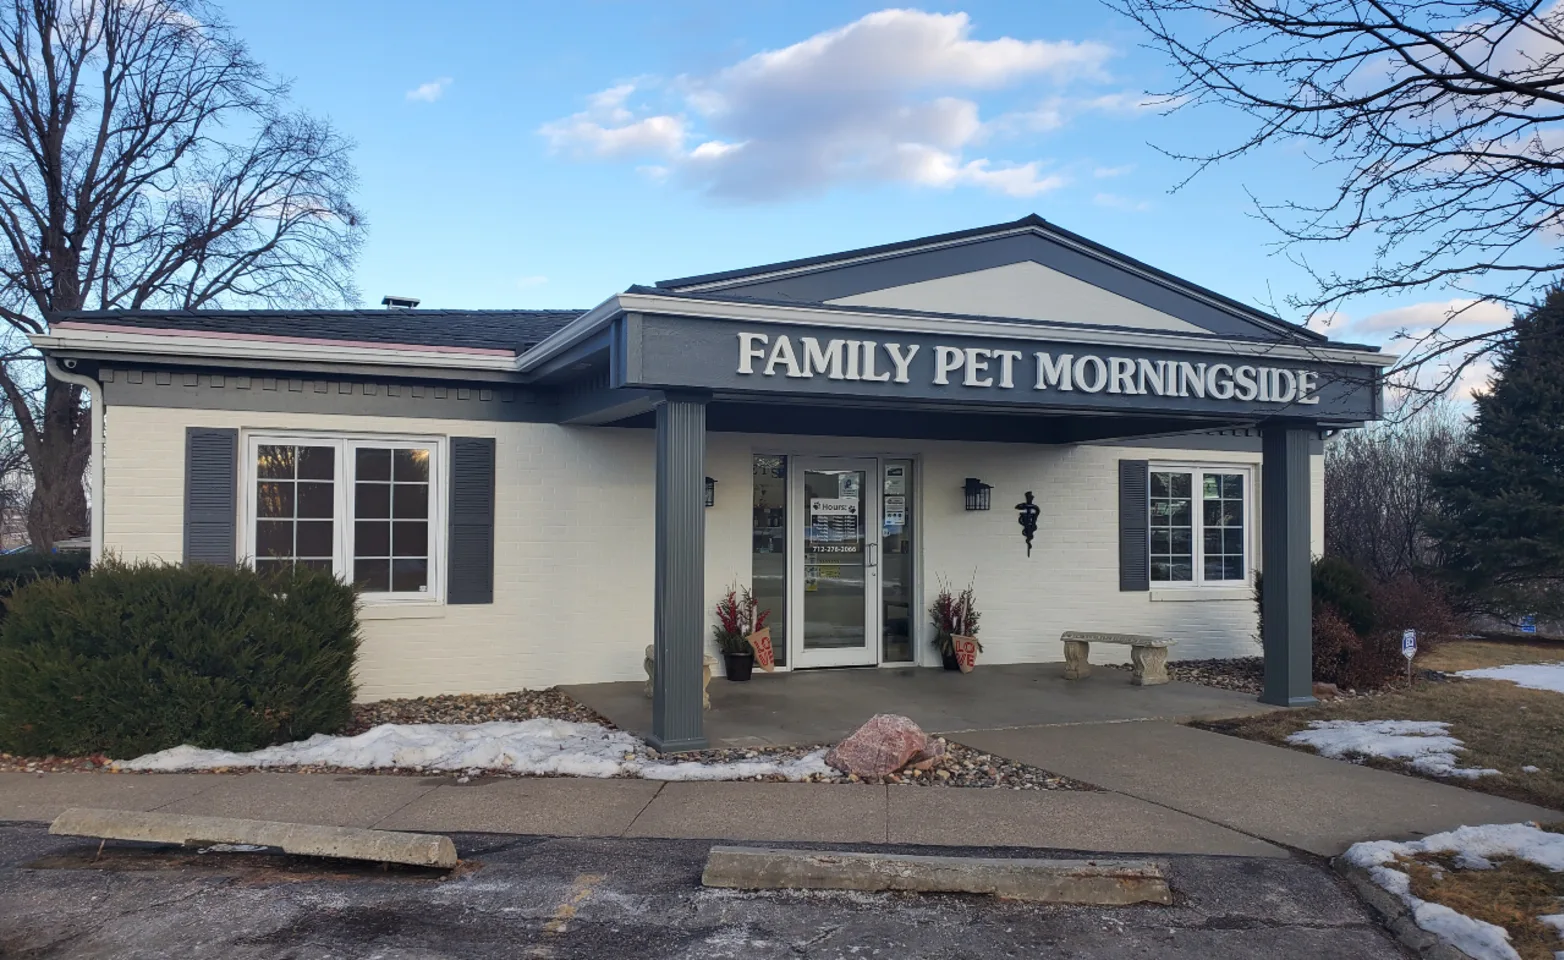 Family Pet Hospital at Morningside 0131s - Building Exterior